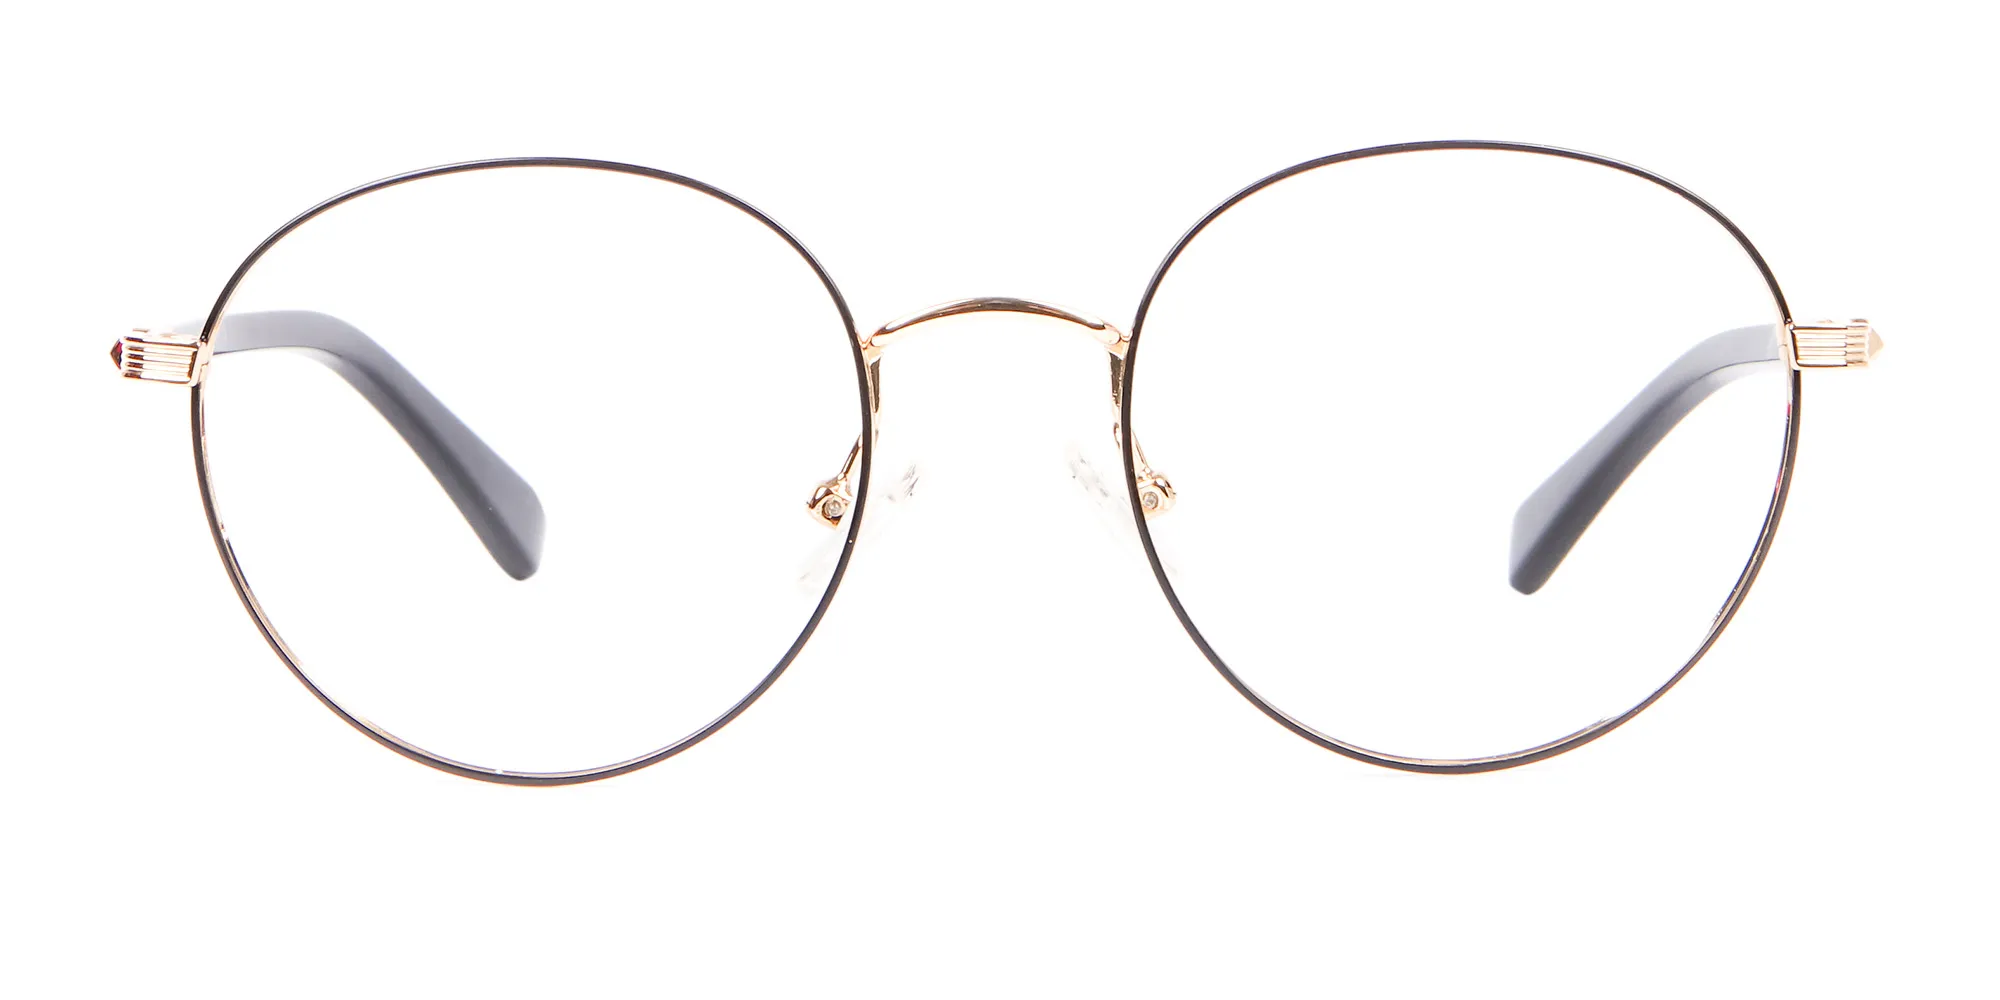 Round Gold Metal Eyeglasses Frame - 2